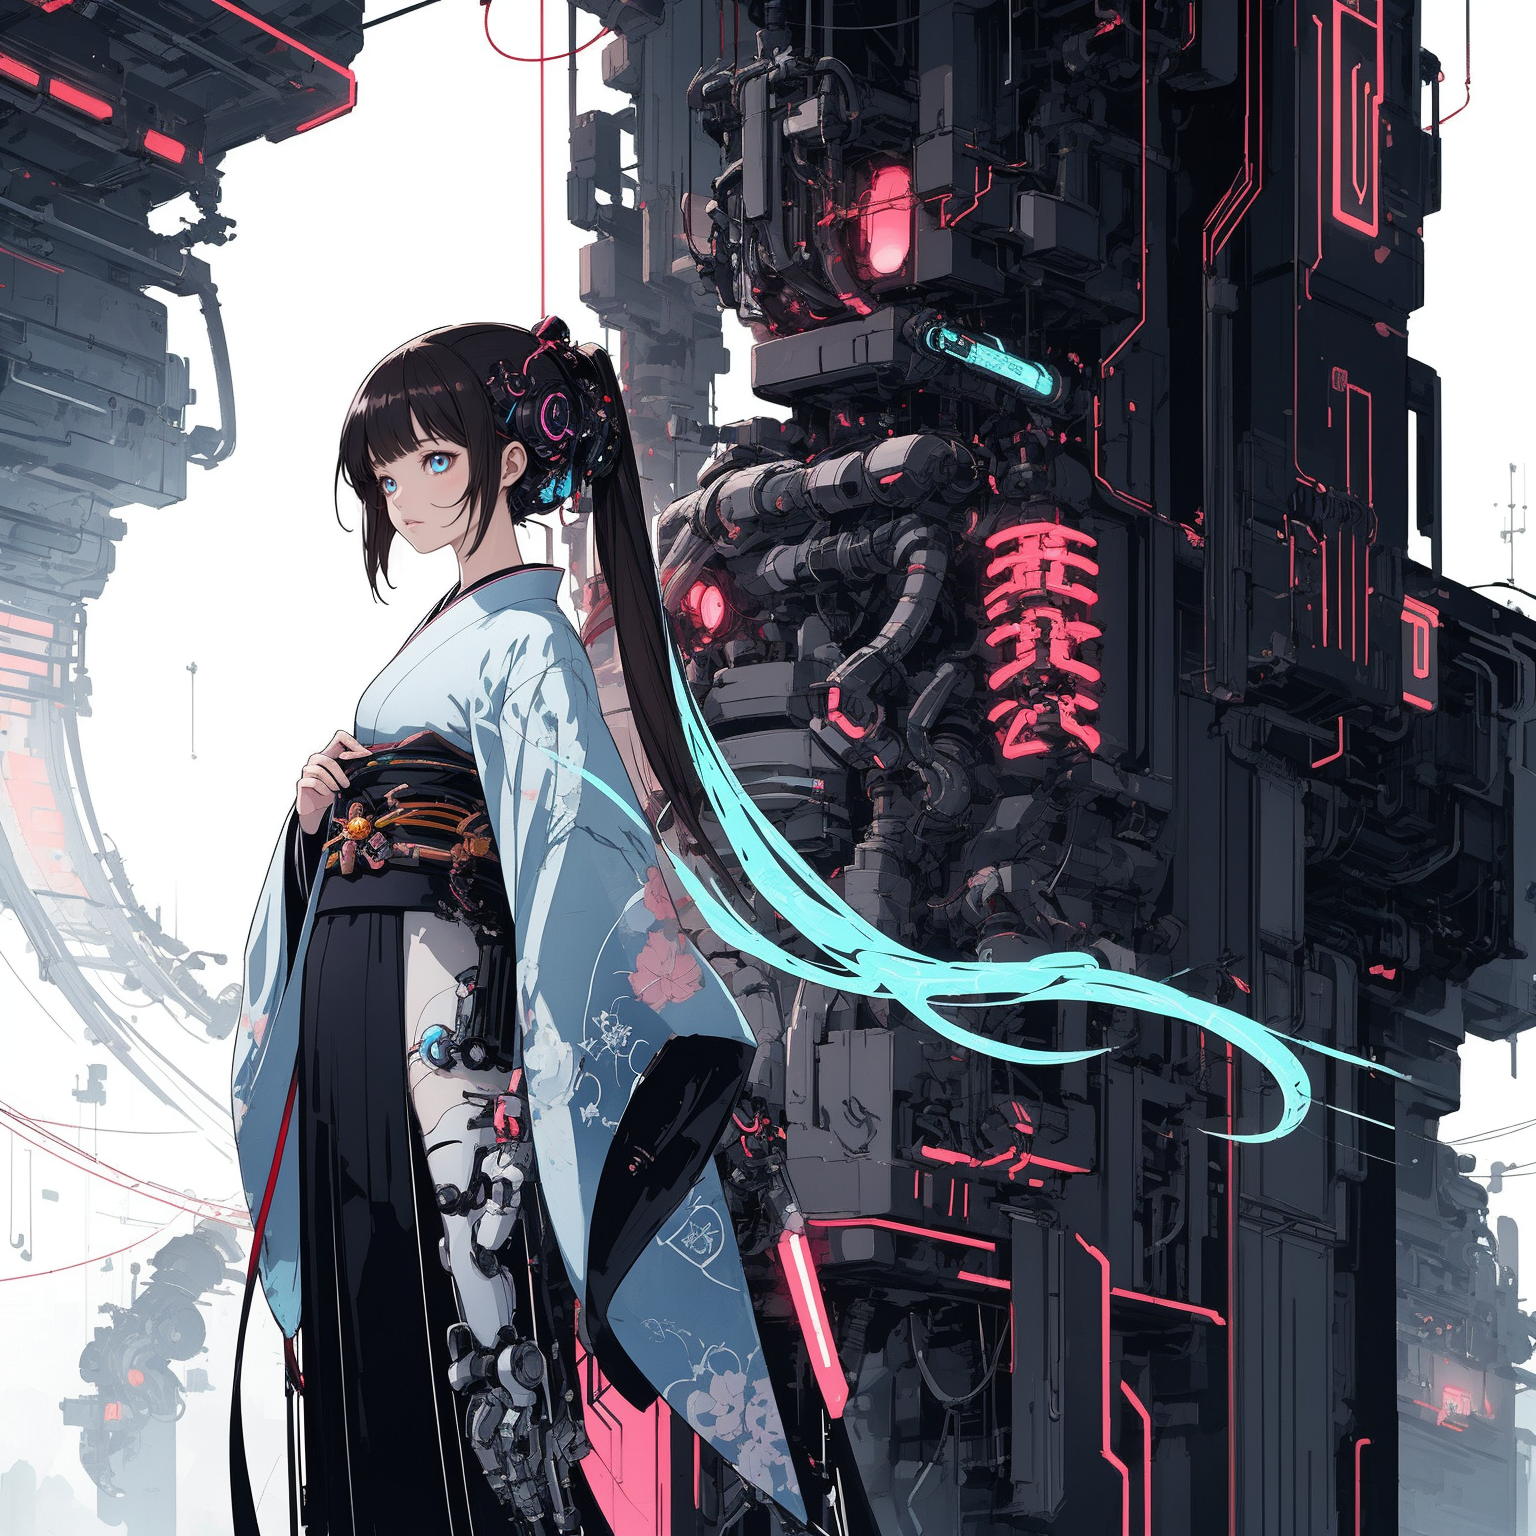 Concept art, Technical illustration, young Woman, (miku:0.7), dark hair, kimono, cyber ,mechanical